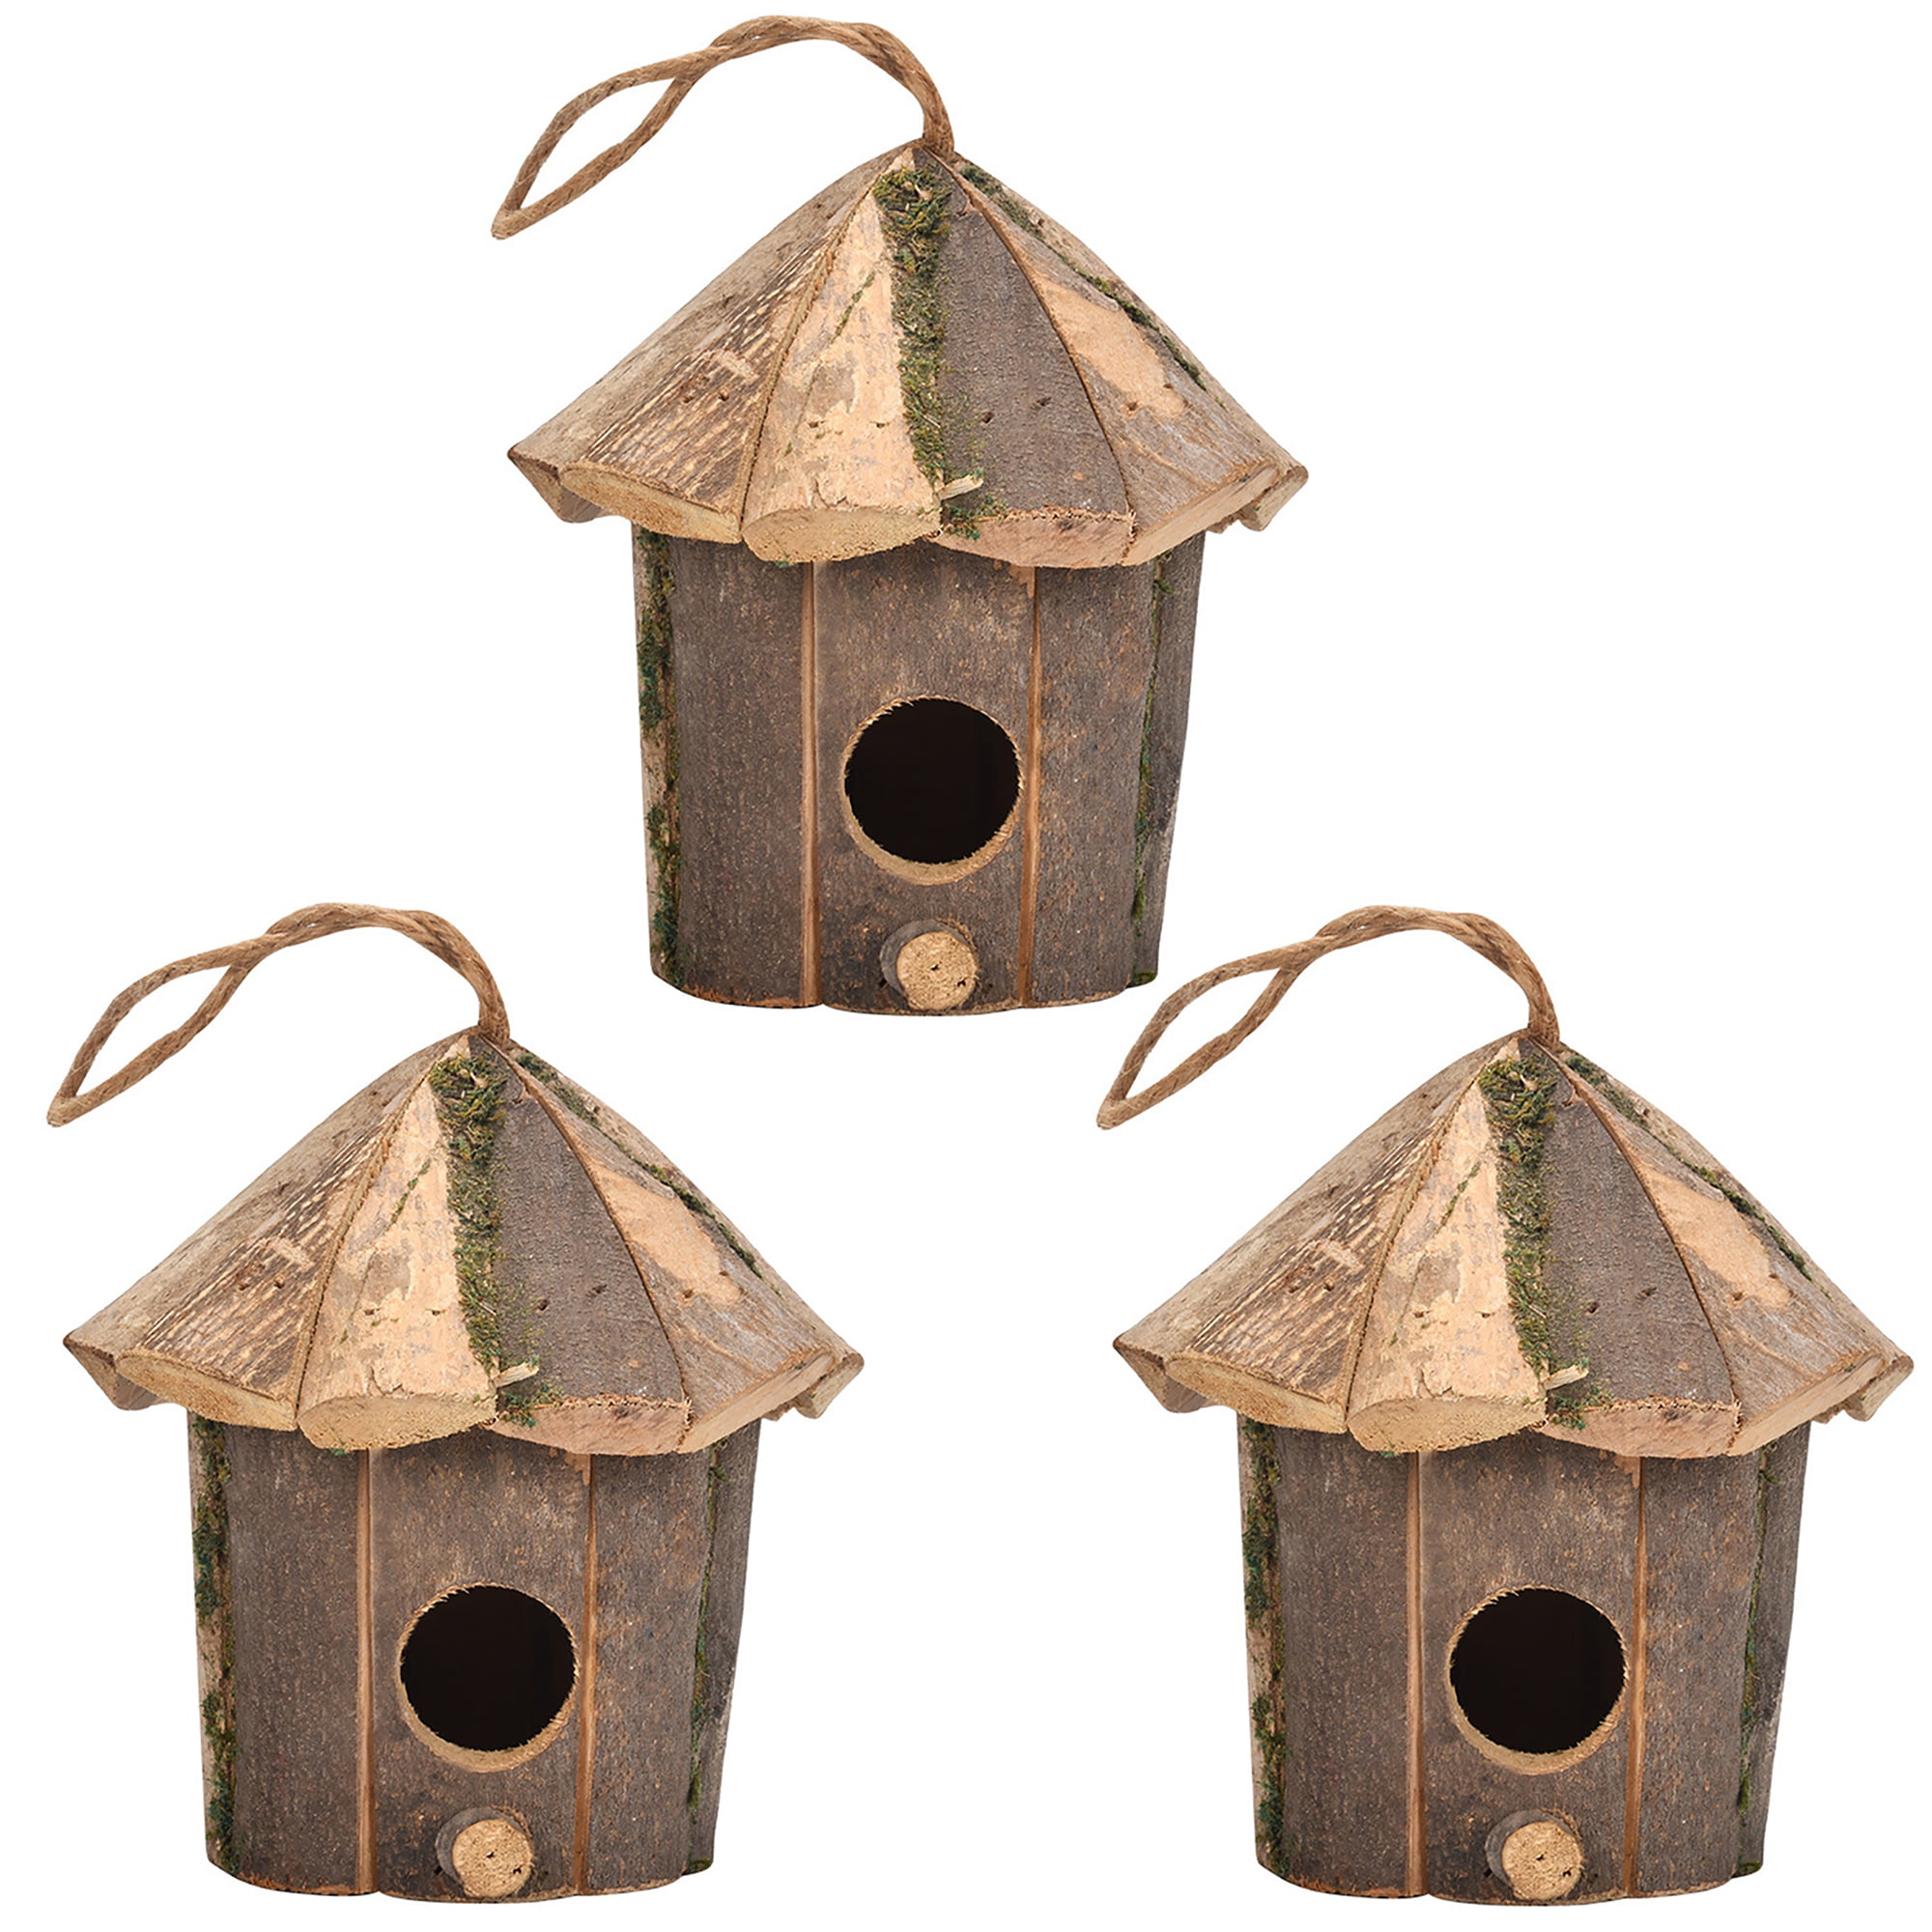 1 X Bird House Nest Box Wooden Hanging Bird Boxes Wood Birdhouse Garden Decor 